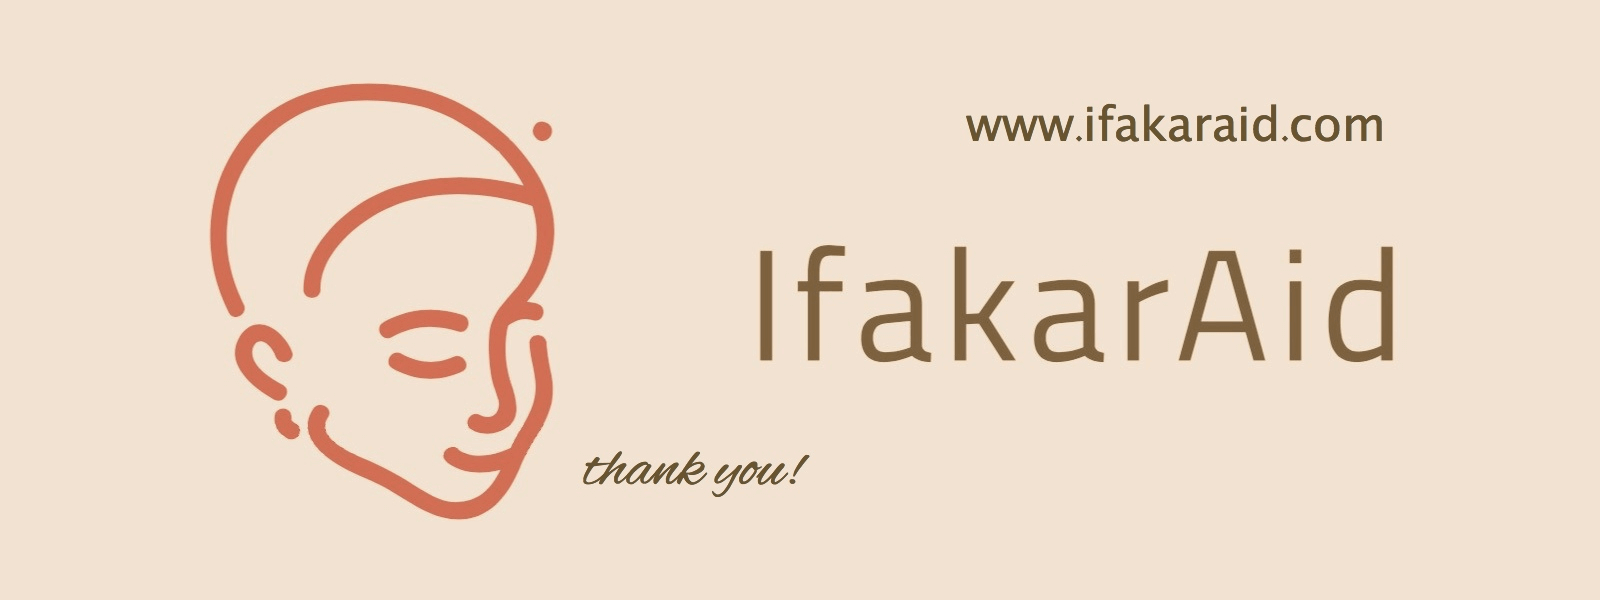 ifakaraid-tpp-banner